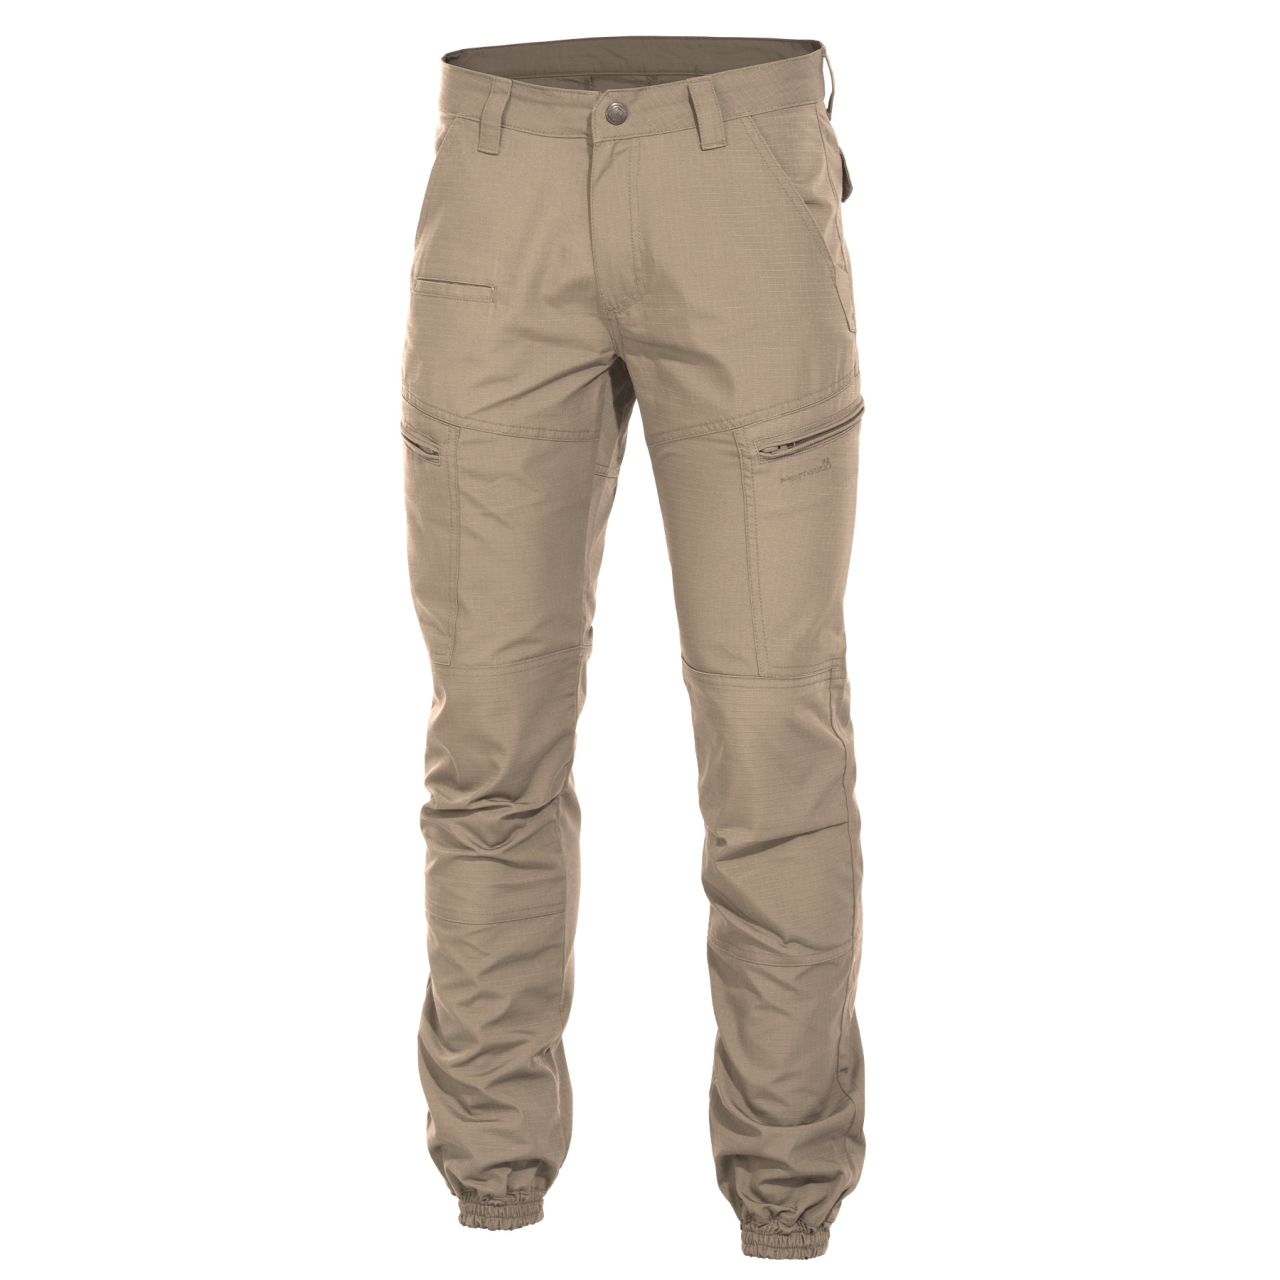 Kalhoty Pentagon Ypero - béžové, 44 L